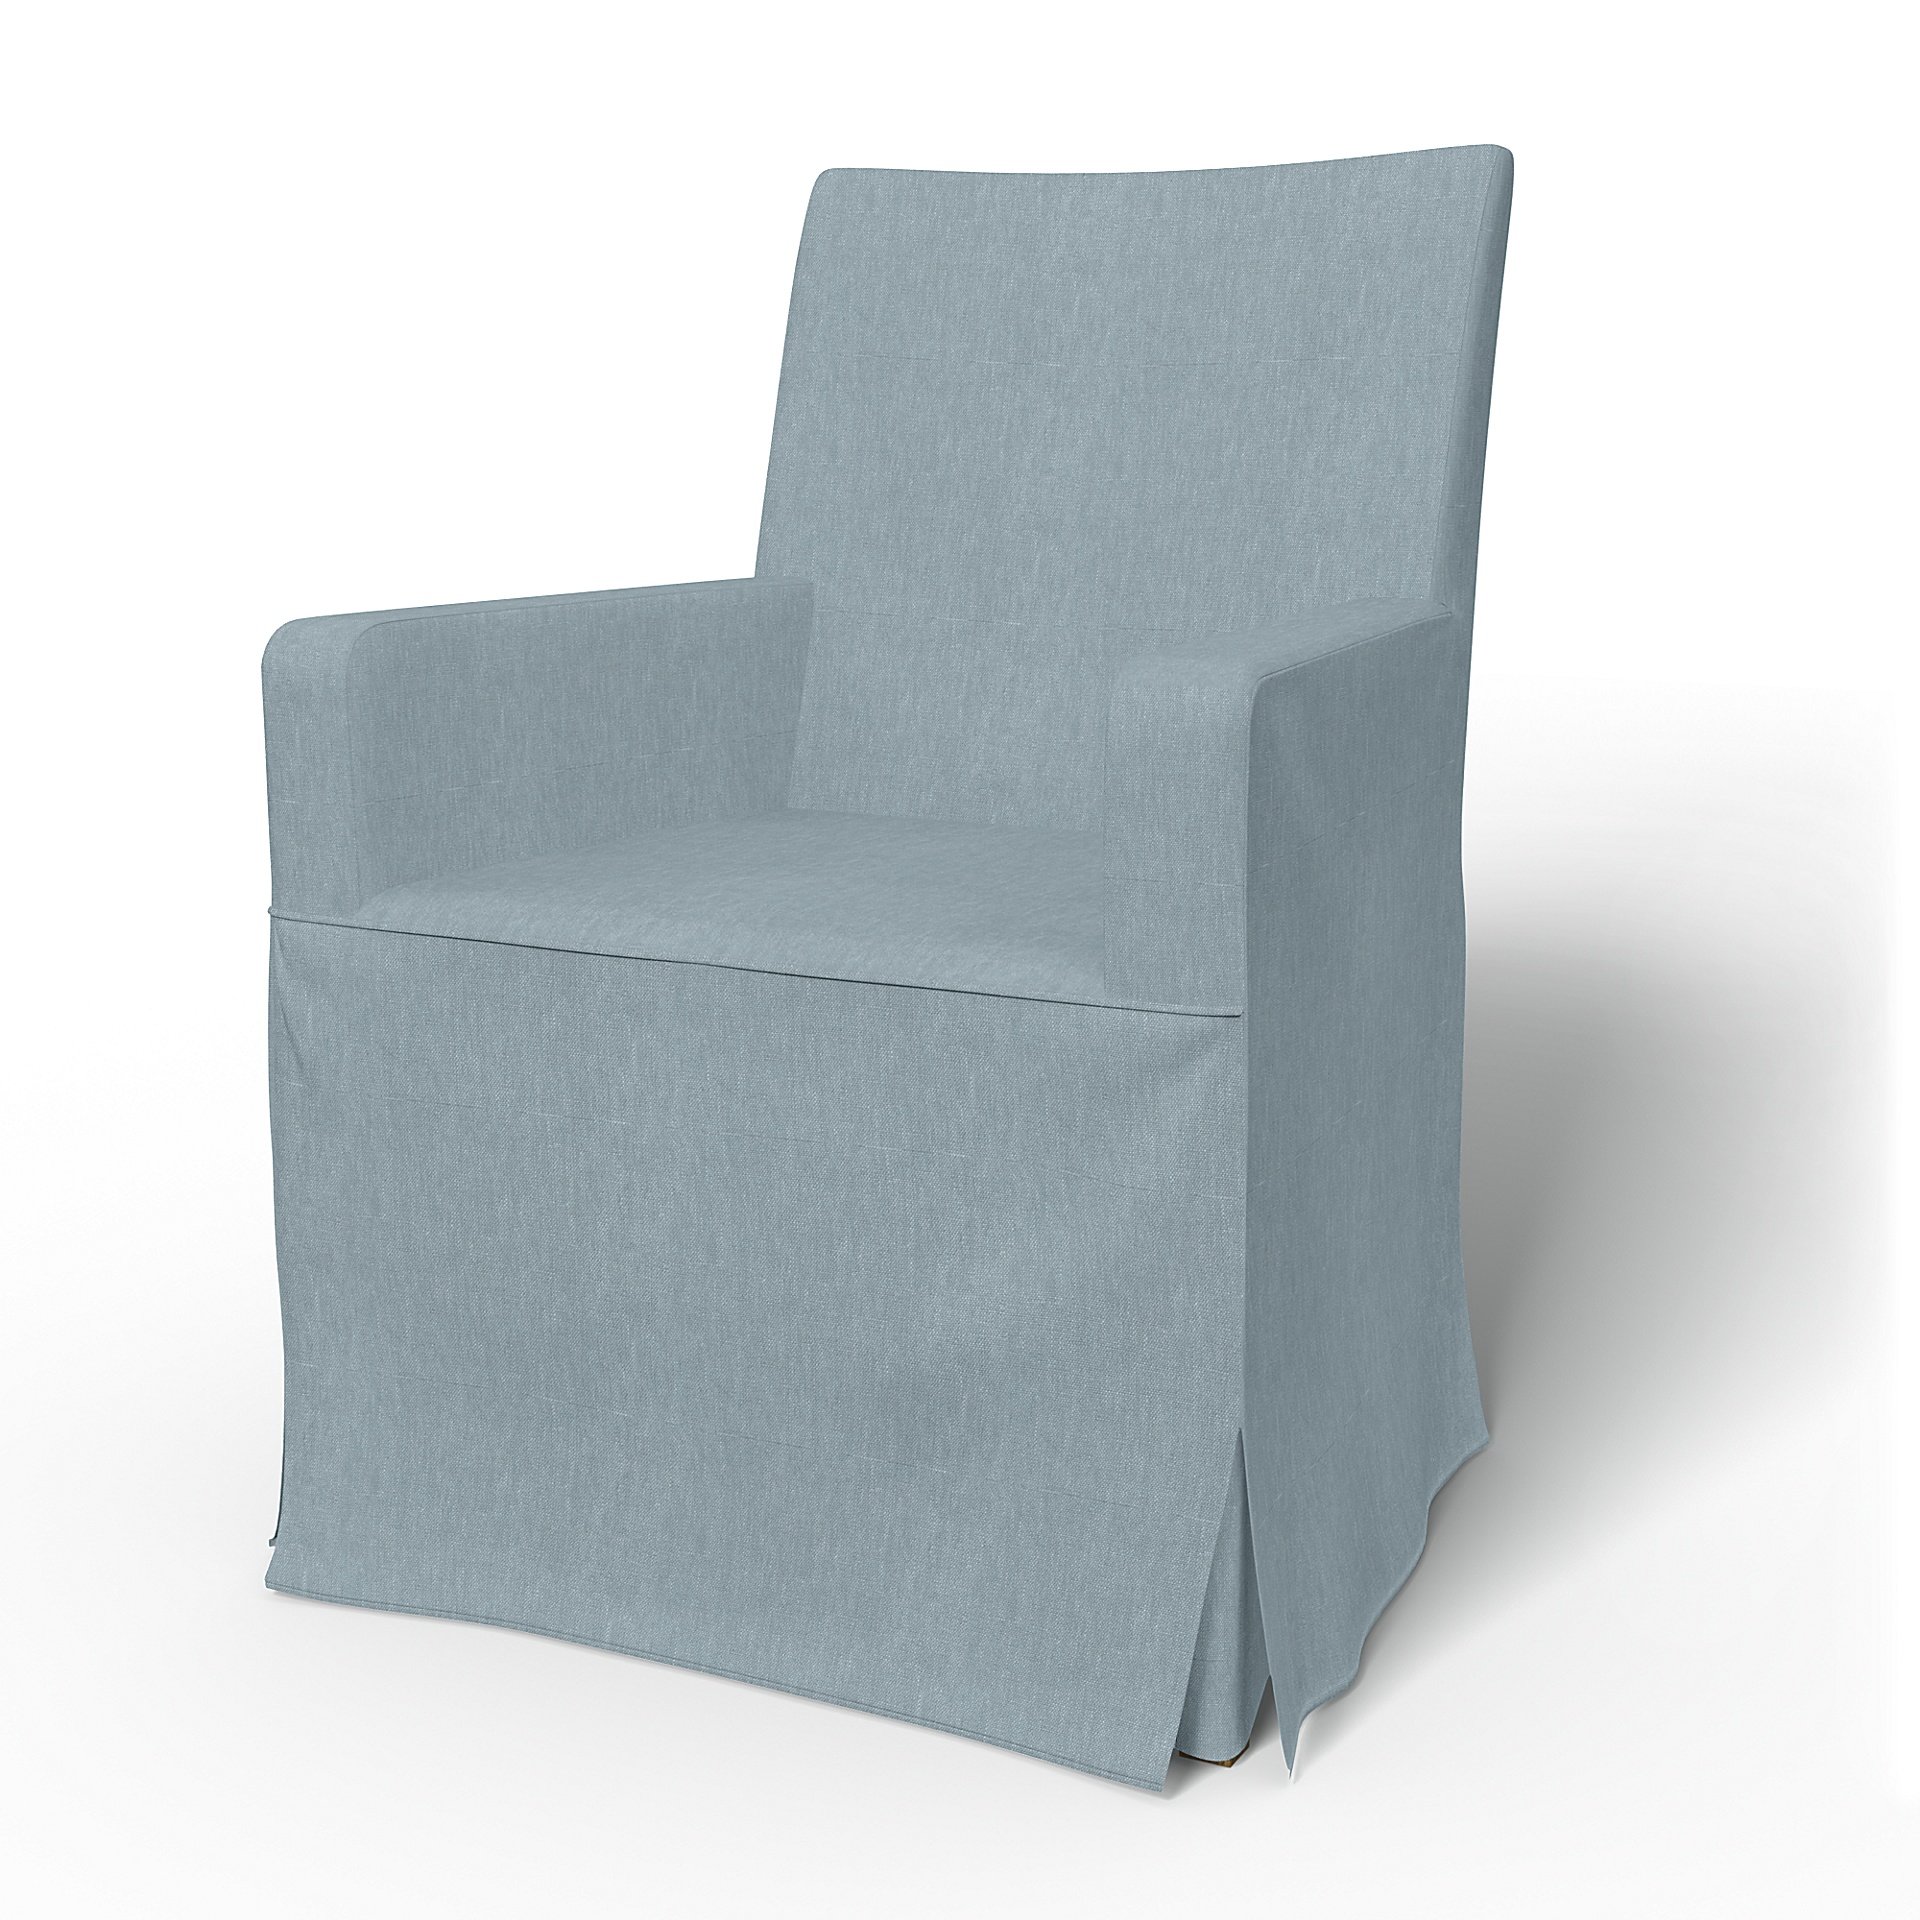 IKEA - Henriksdal, Chair cover w/ armrests, long skirt box pleat, Dusty Blue, Linen - Bemz